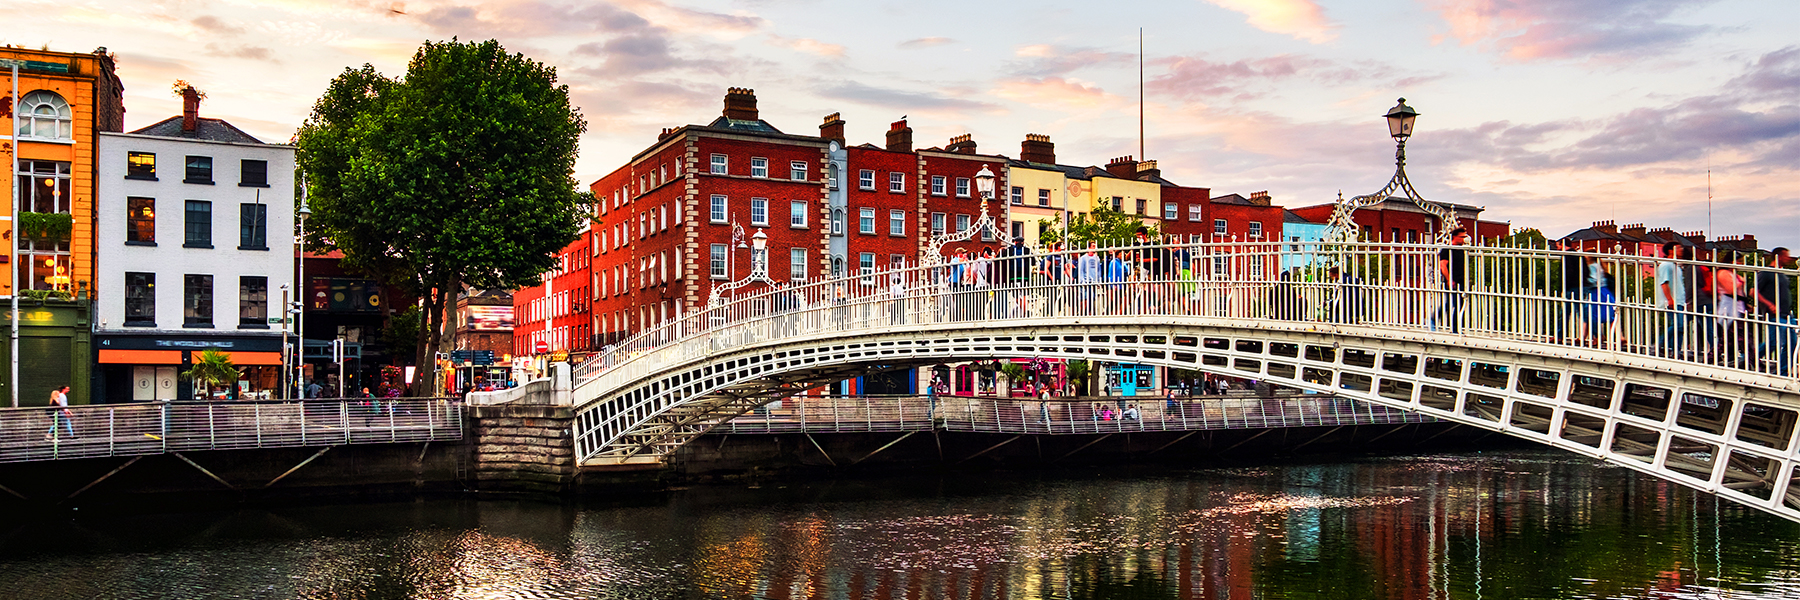 Dublin, Ireland city view by a bridge